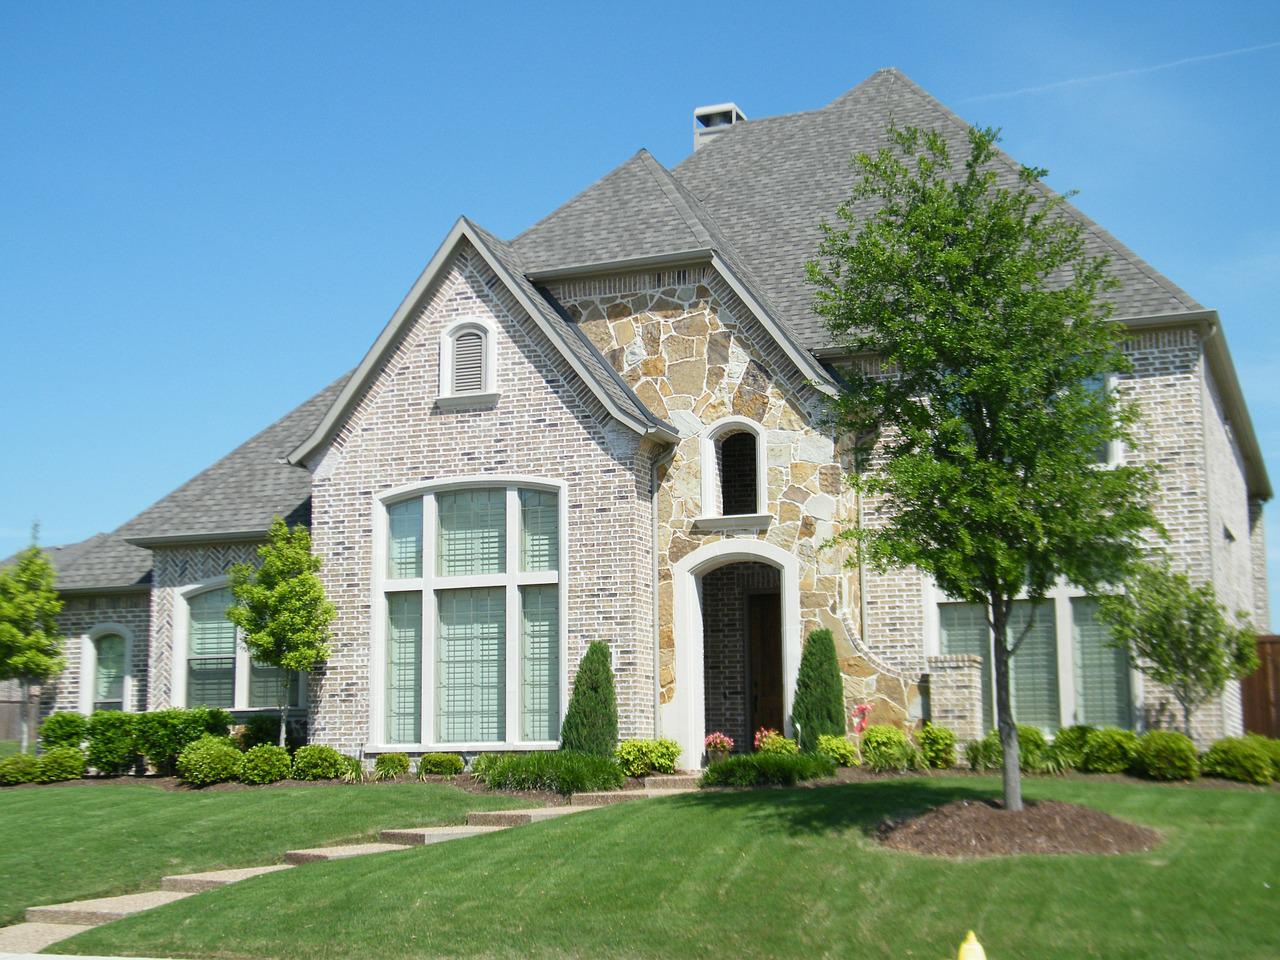 a brick house in a suburban area